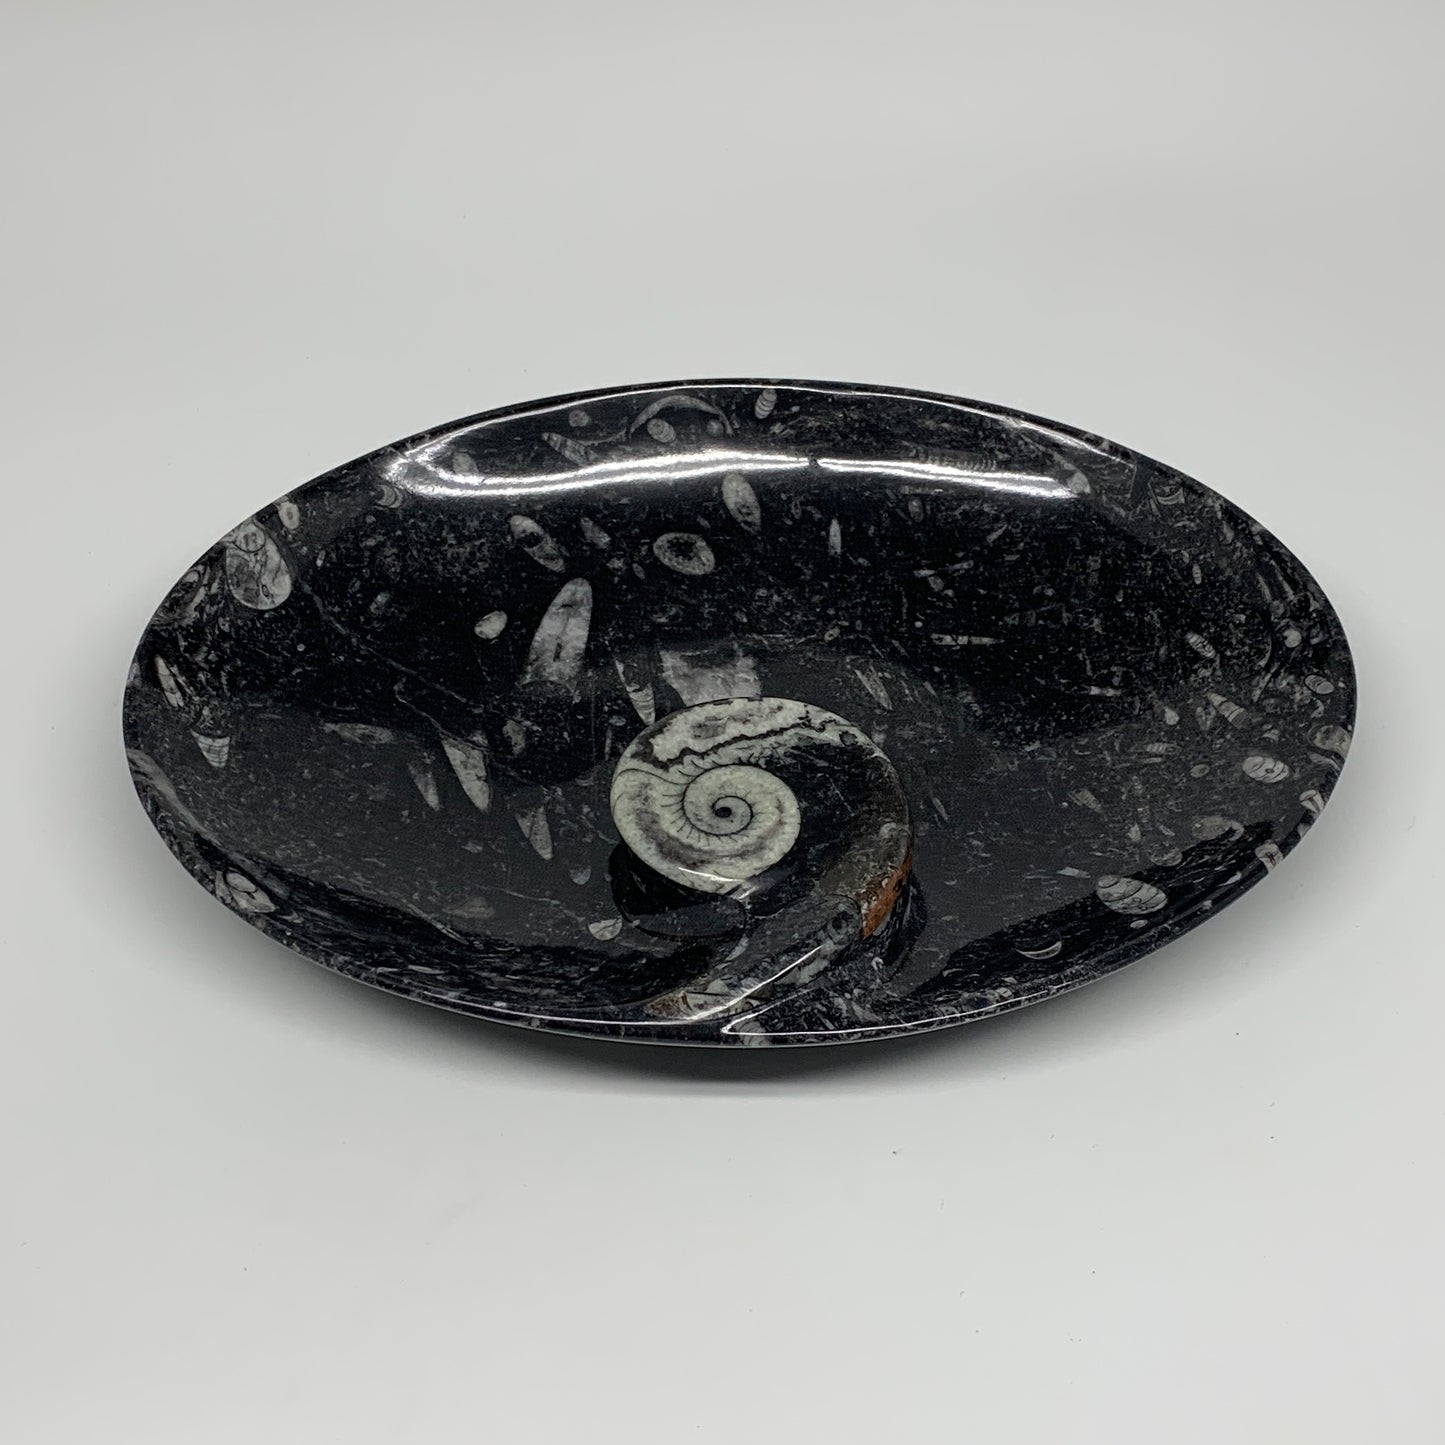 742g, 8.75"x6.5" Black Fossils Ammonite Orthoceras Bowl Oval Ring @Morocco,B8392